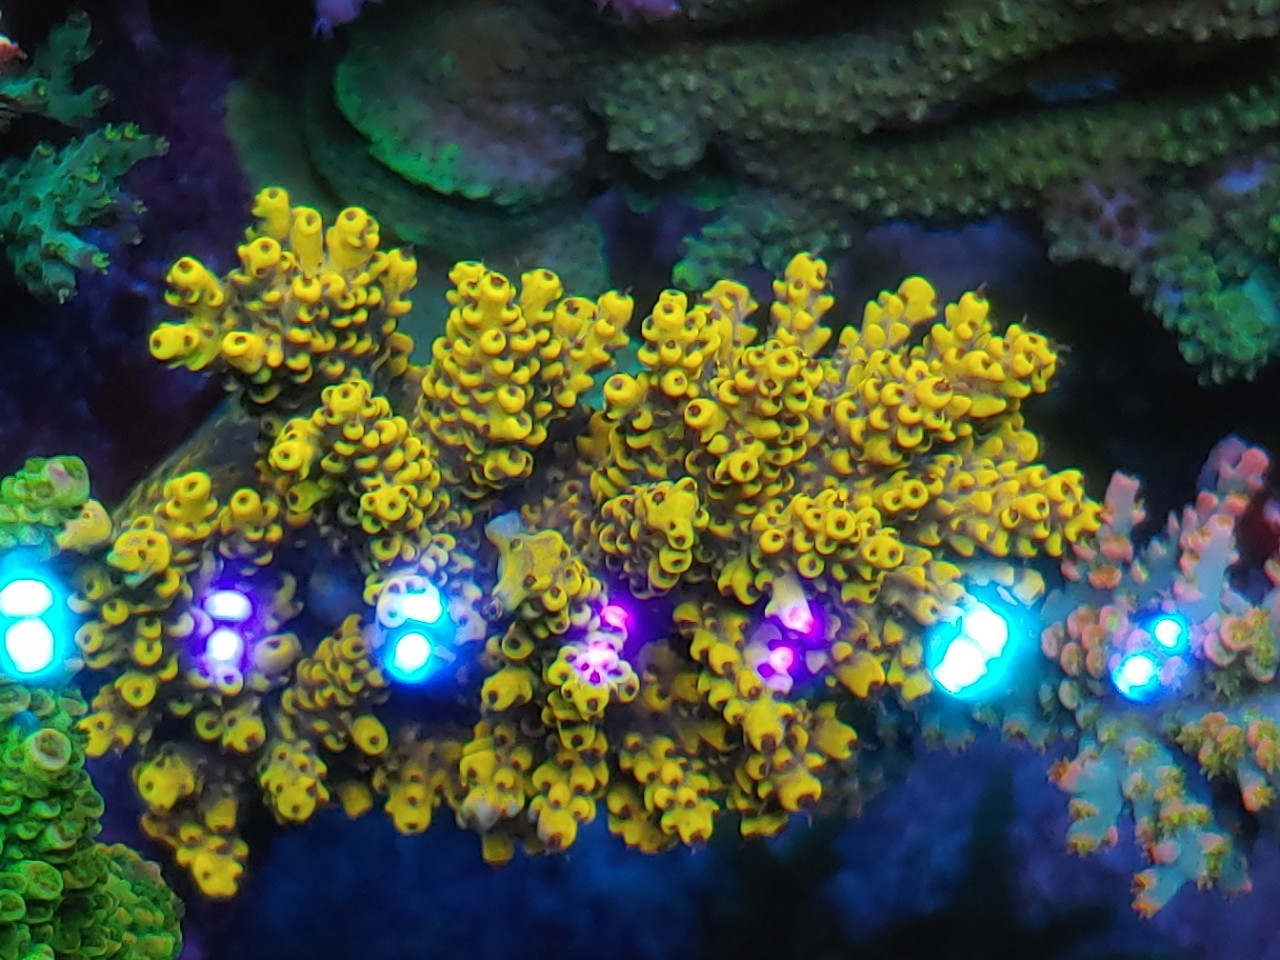 orphek-Terbaik-2022-LED-cahaya-OR3-Biru-plus-terumbu-karang-akuarium1